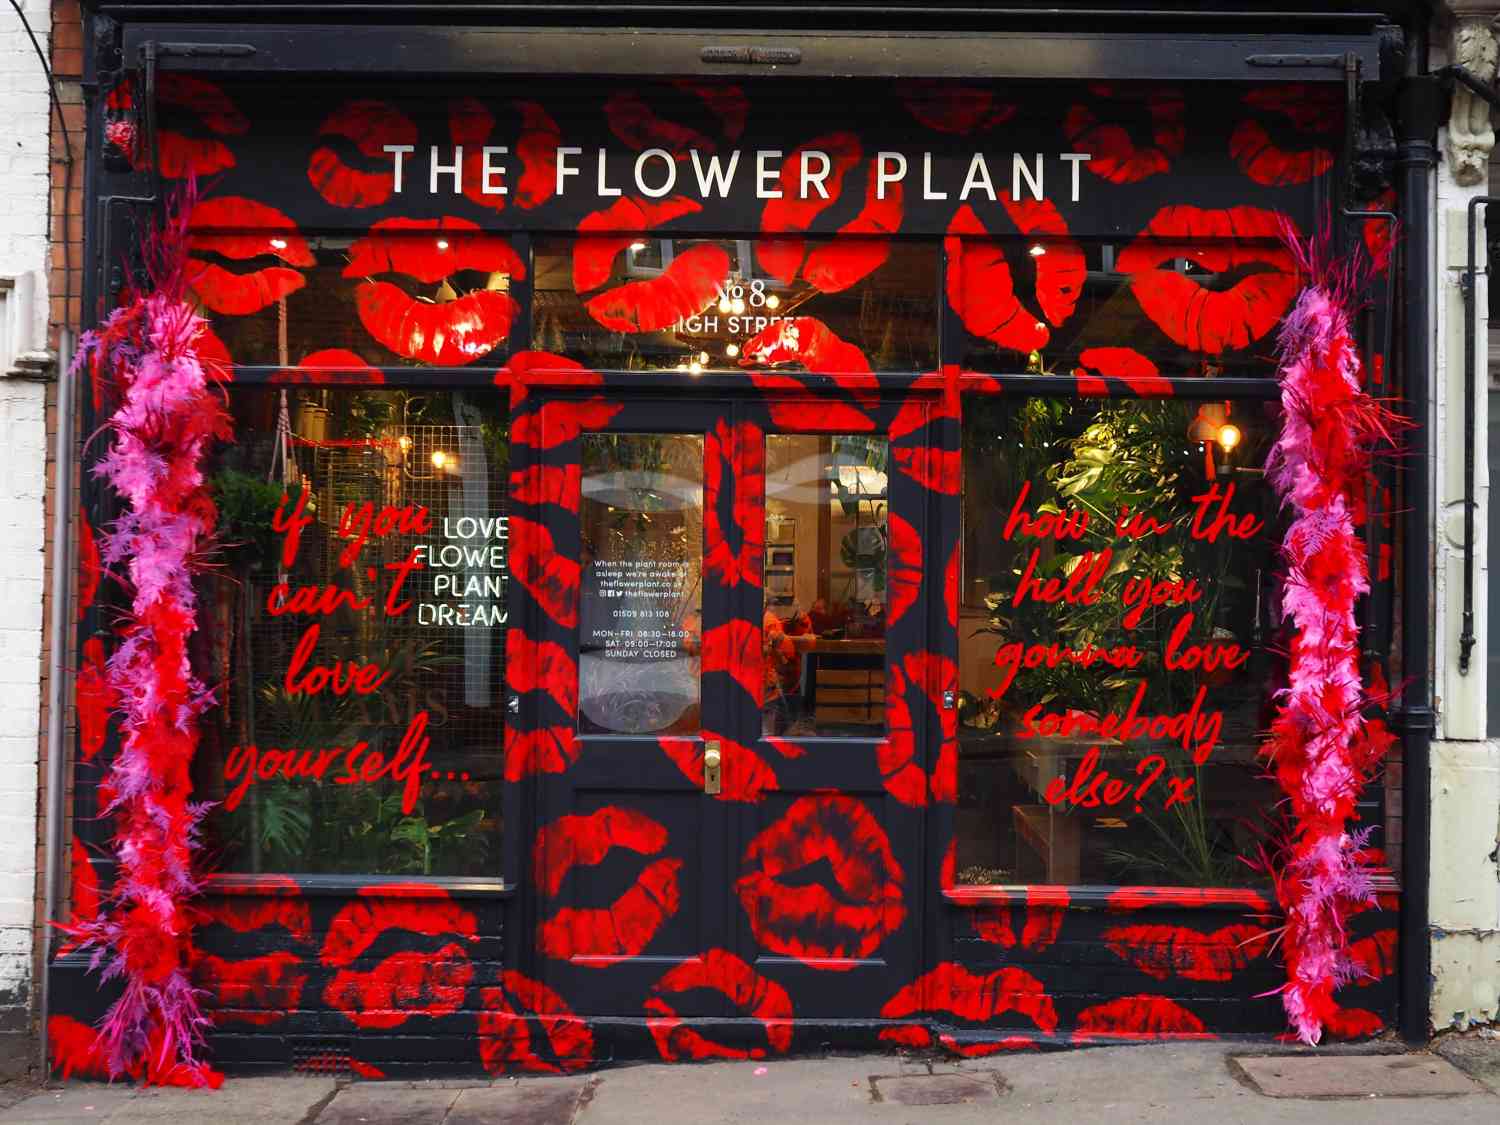 Giant lipstick kisses on shop front